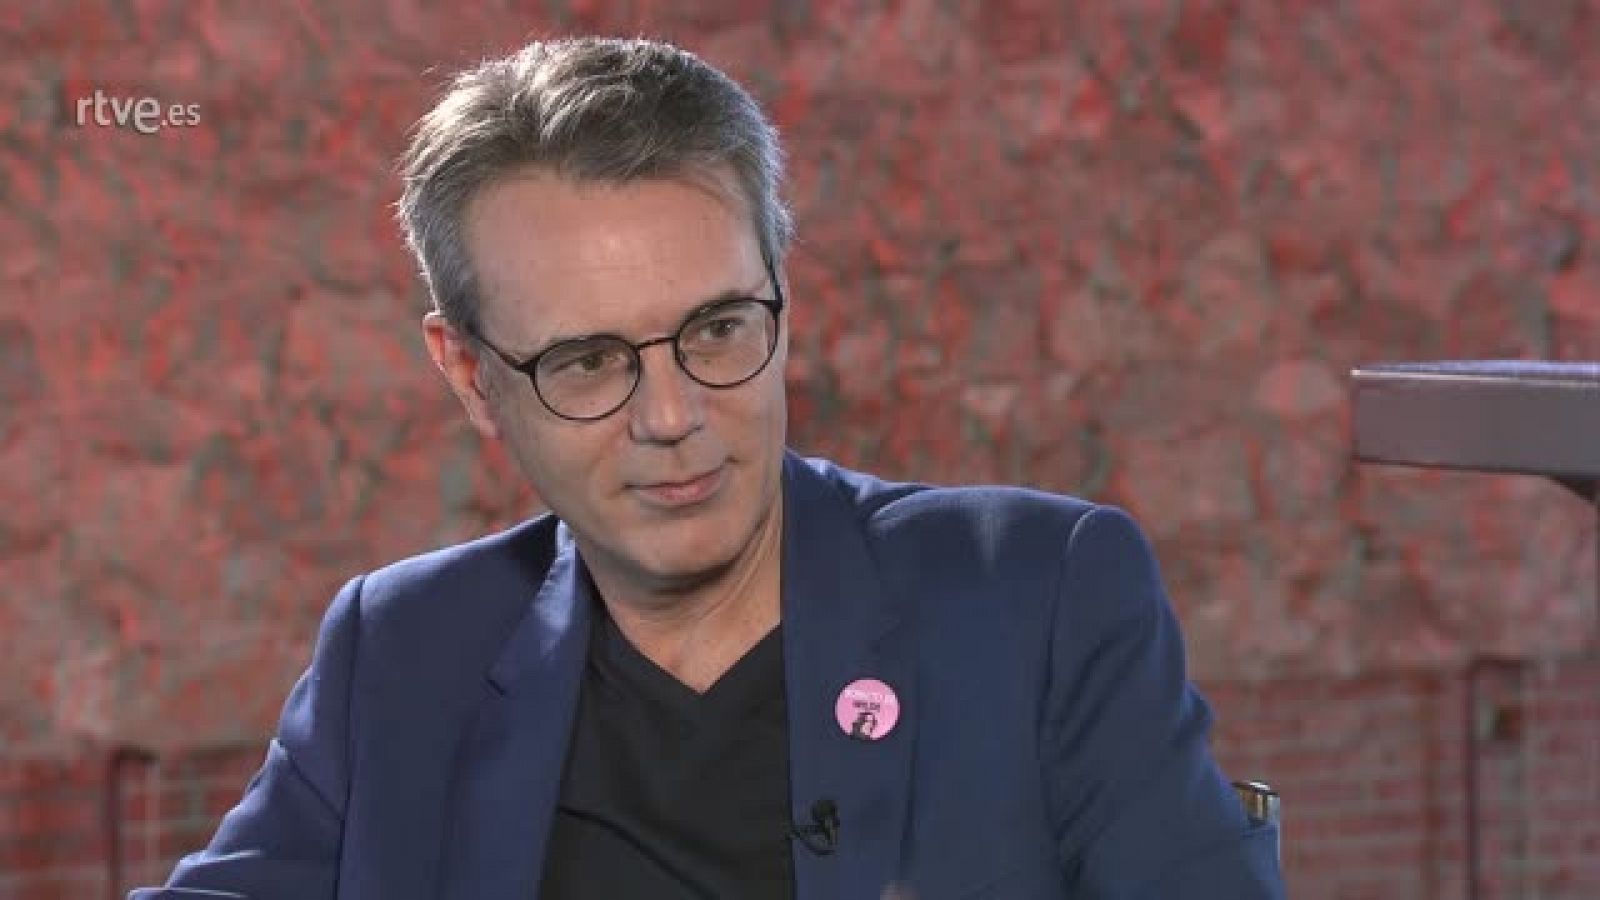 Días de cine: Entrevista íntegra a Pedro Vallín en Días de Cine (Sólo en RTVE.es) | RTVE Play